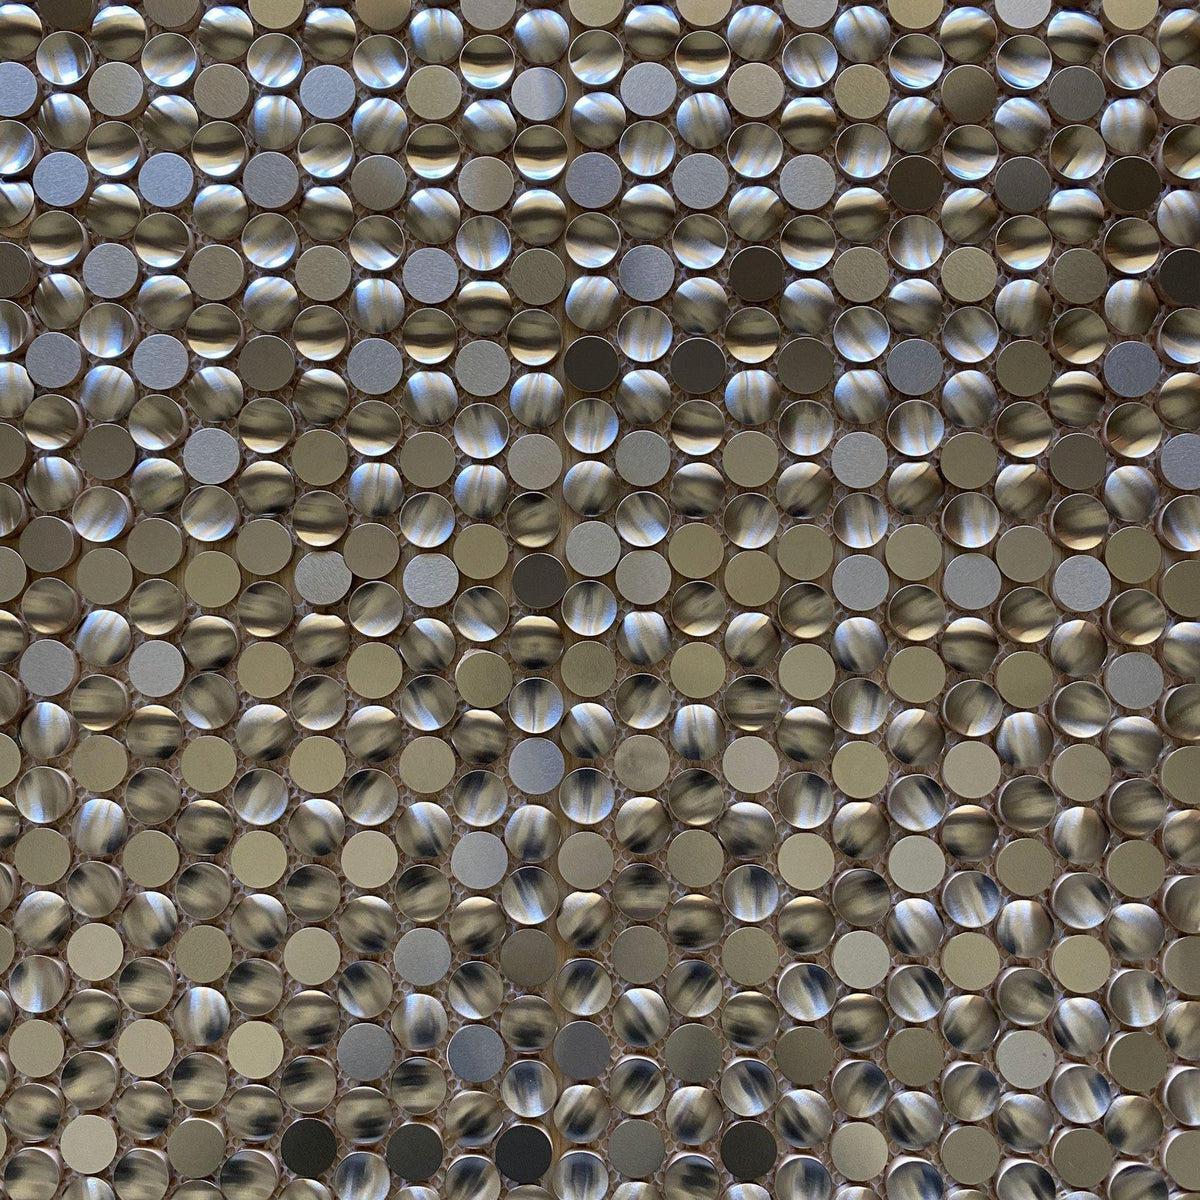 Stainless Steel Penny Pebble Metal Mosaic Tile